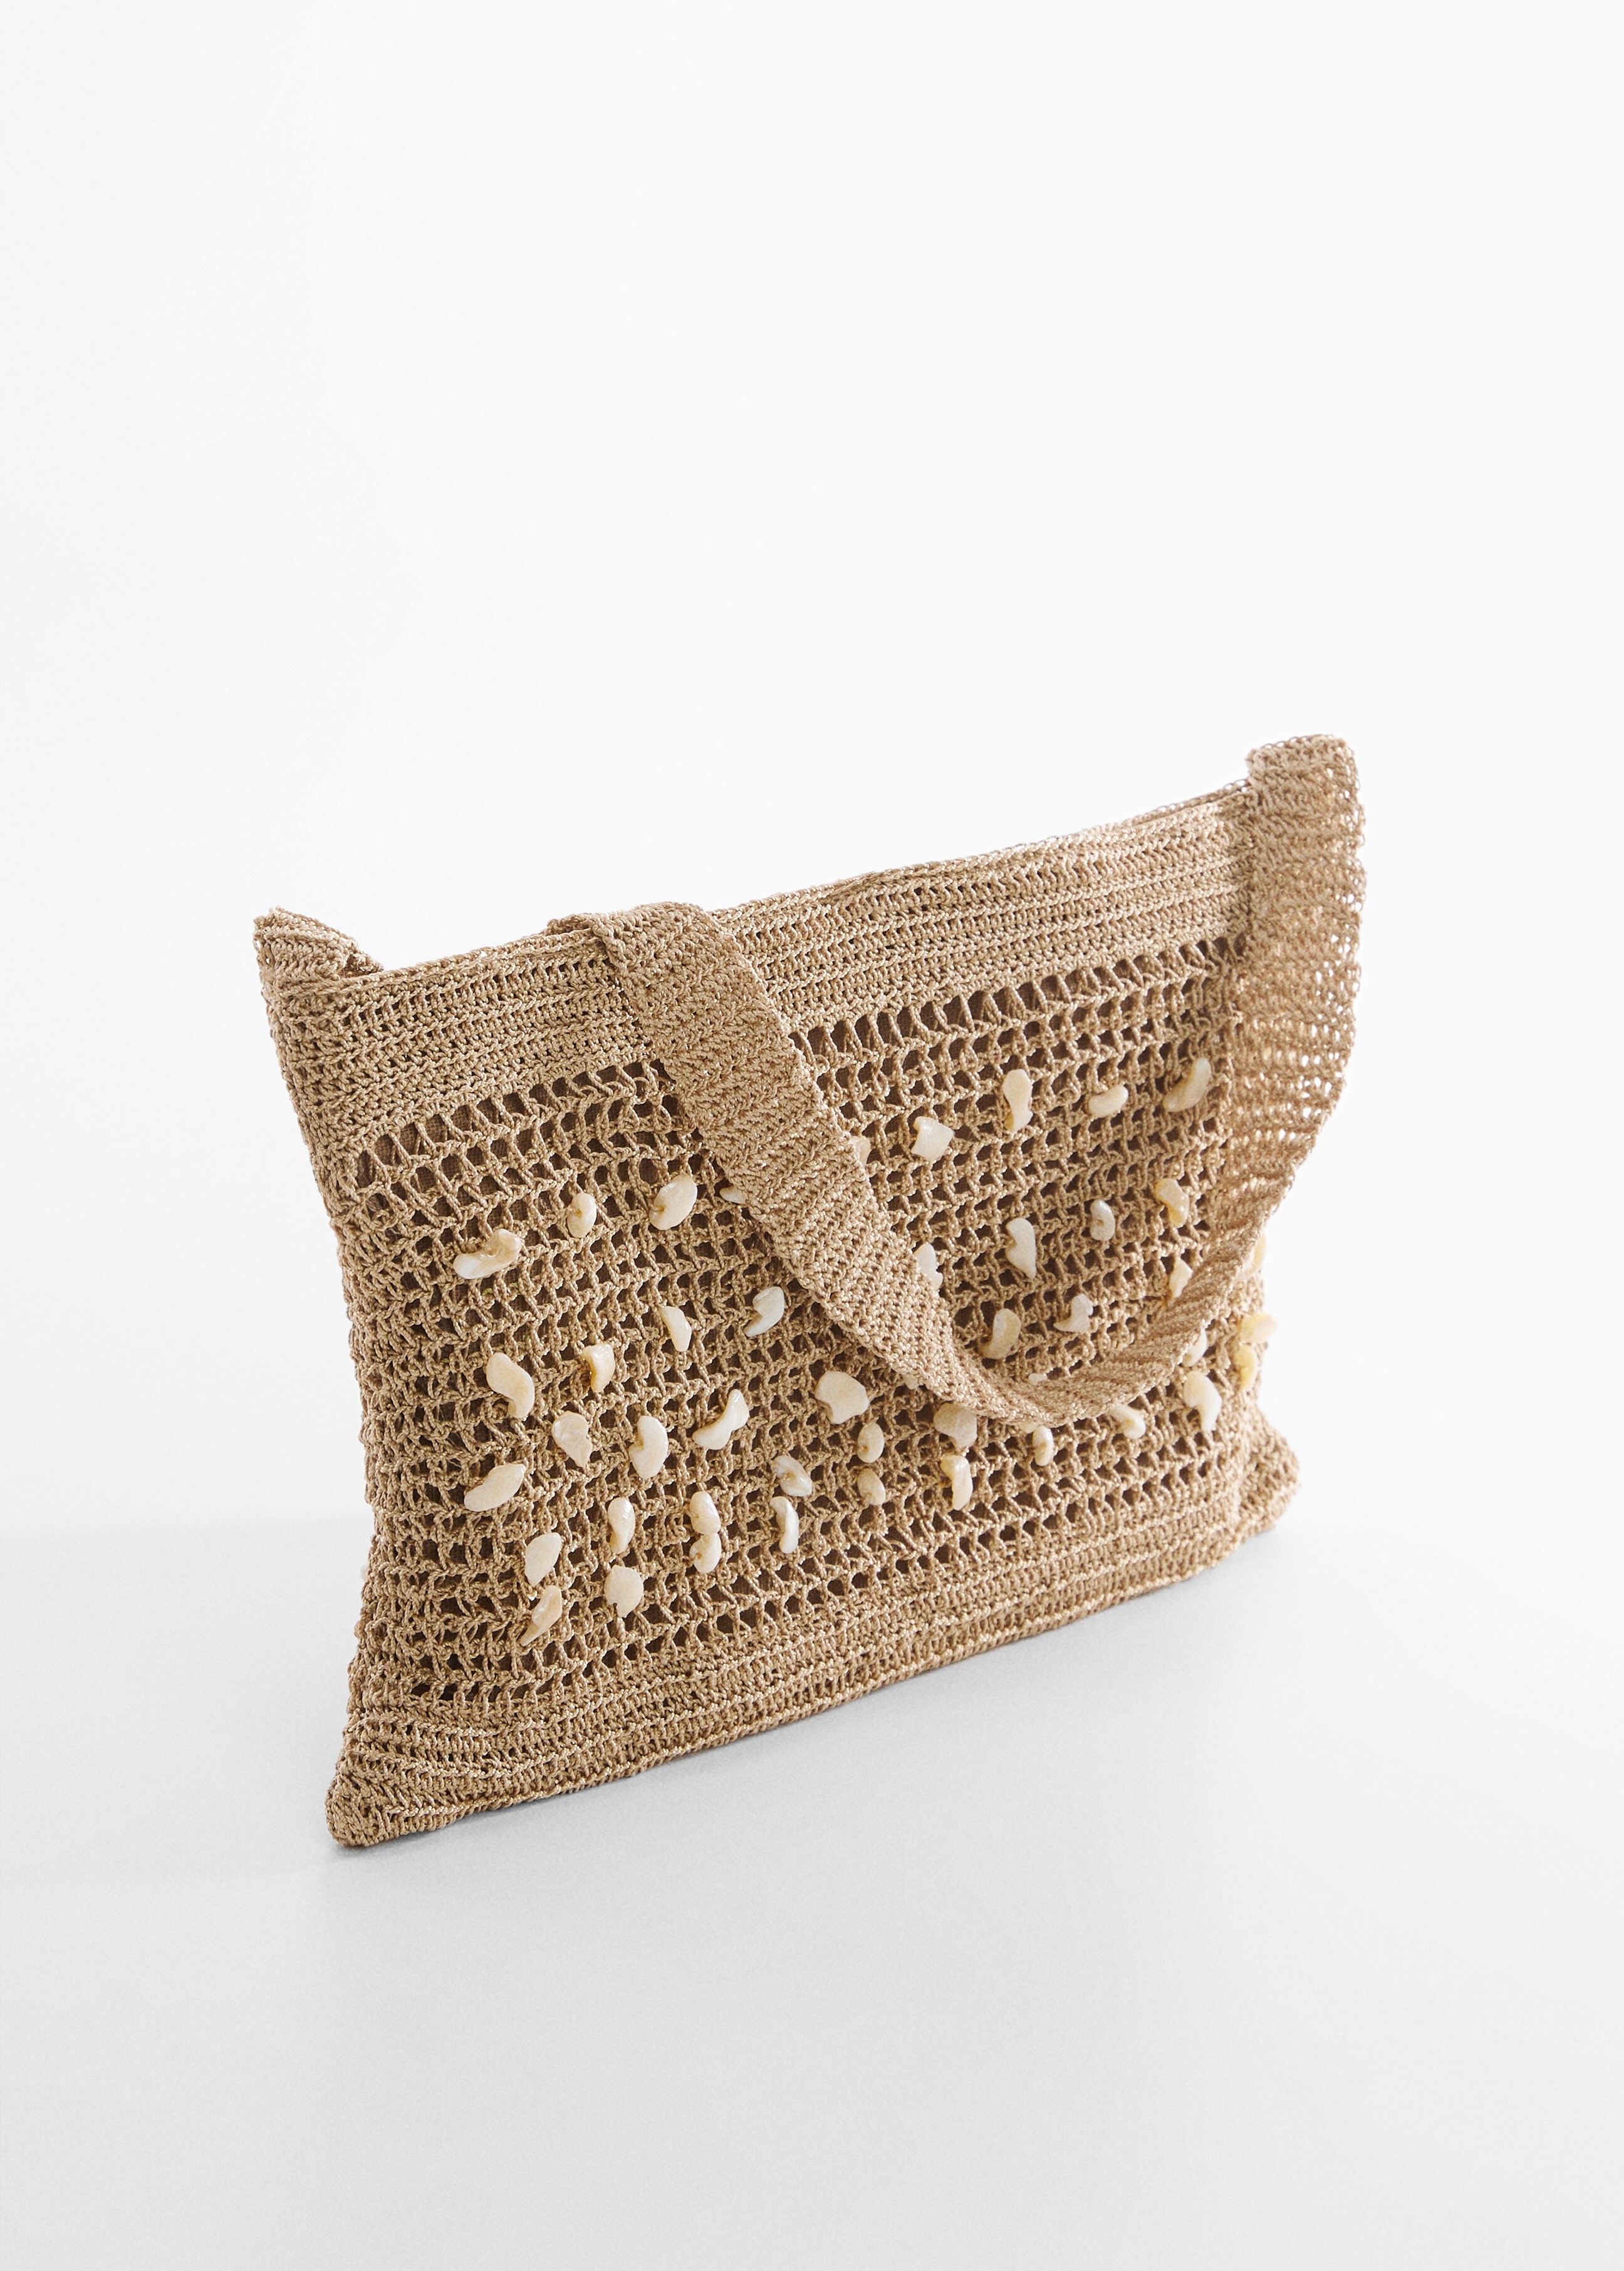 Crochet bag with shell detail - Medium plane